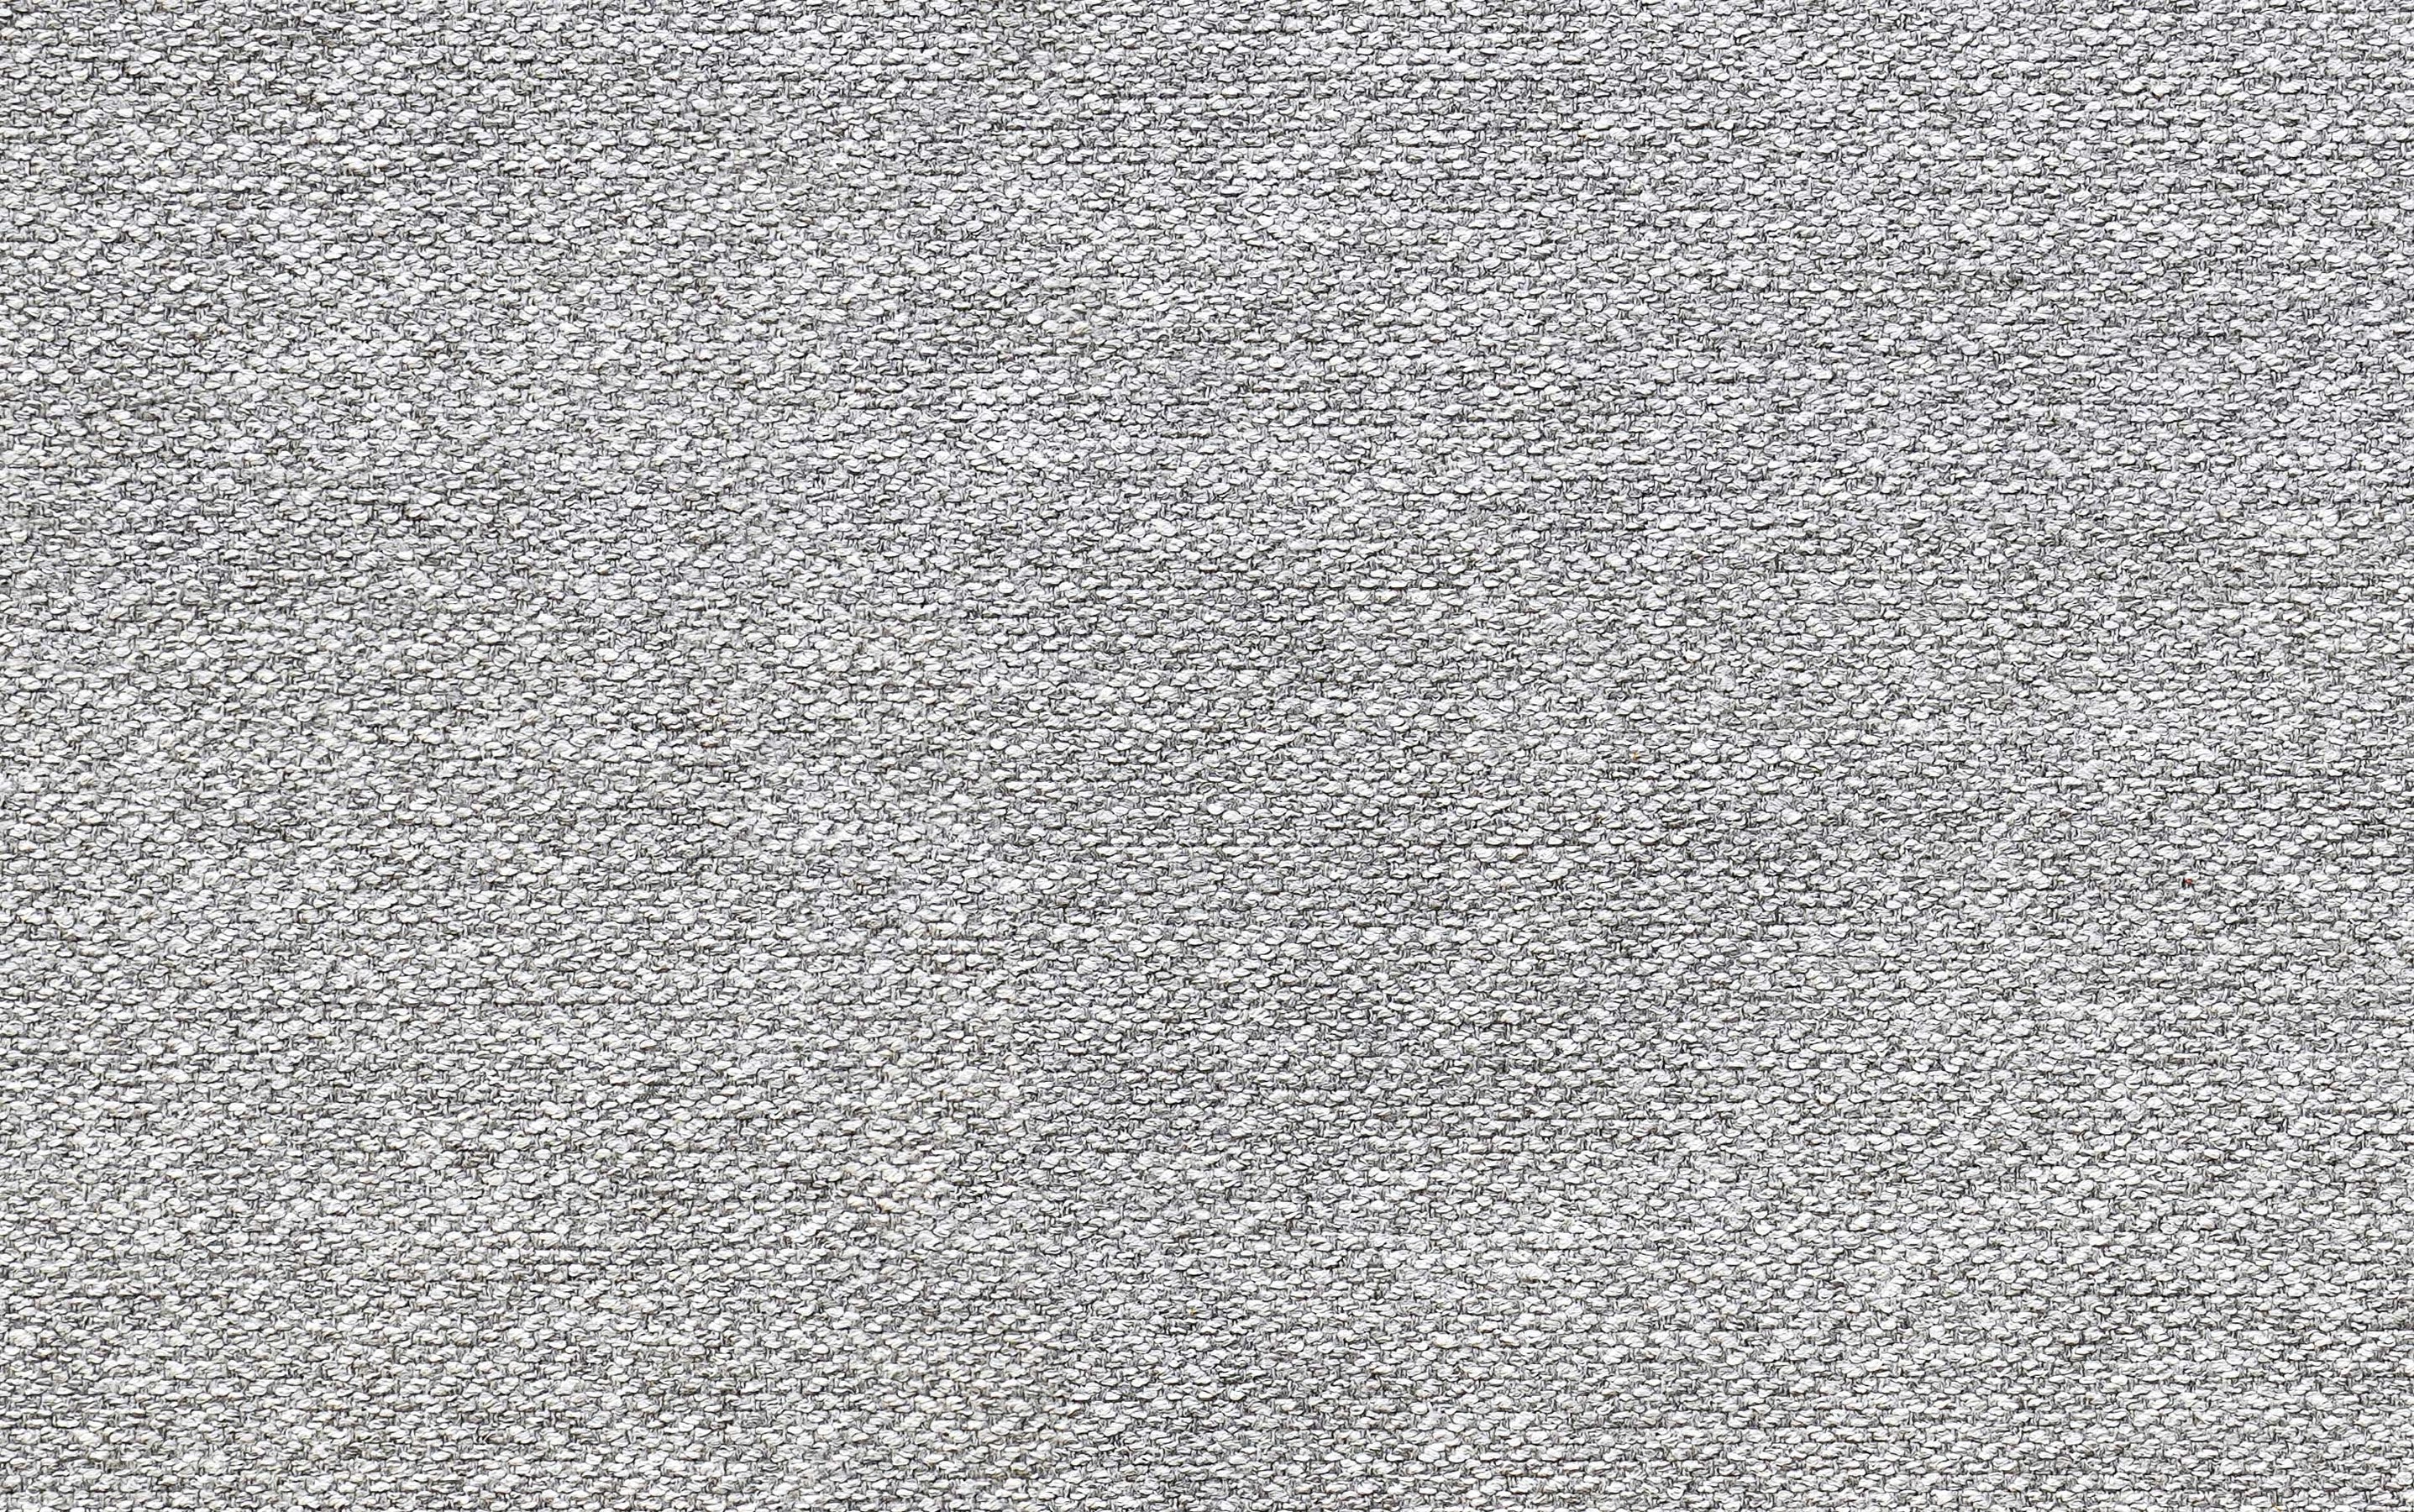 Mist Grey Woven-Blend Fabric | Livingston 90 inch Mid Century Sofa